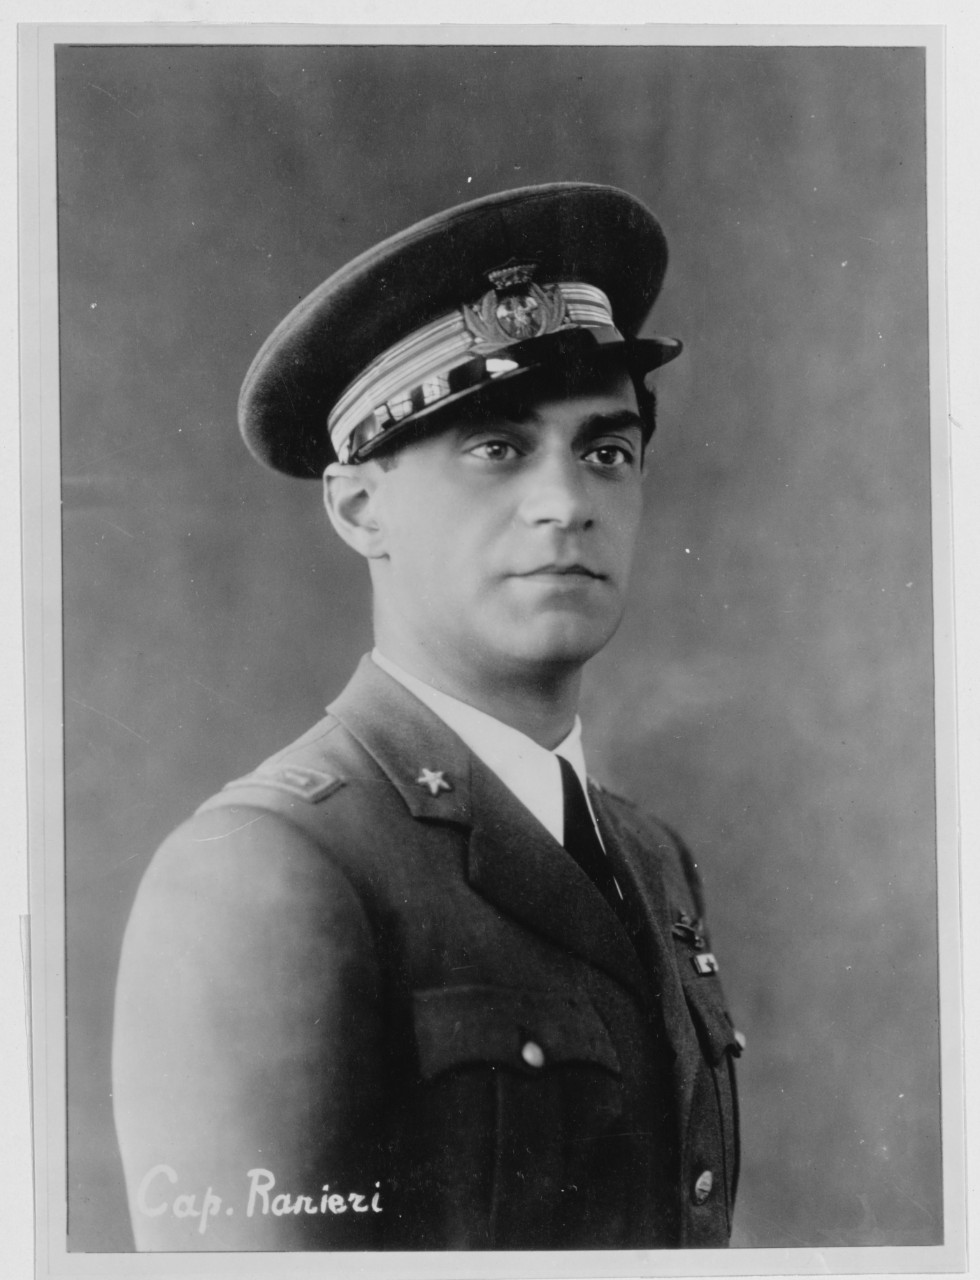 Captain Ranieri, Italian Aviators who flew Savoia-Machetti Seaplanes Trans-Atlantic, 1933